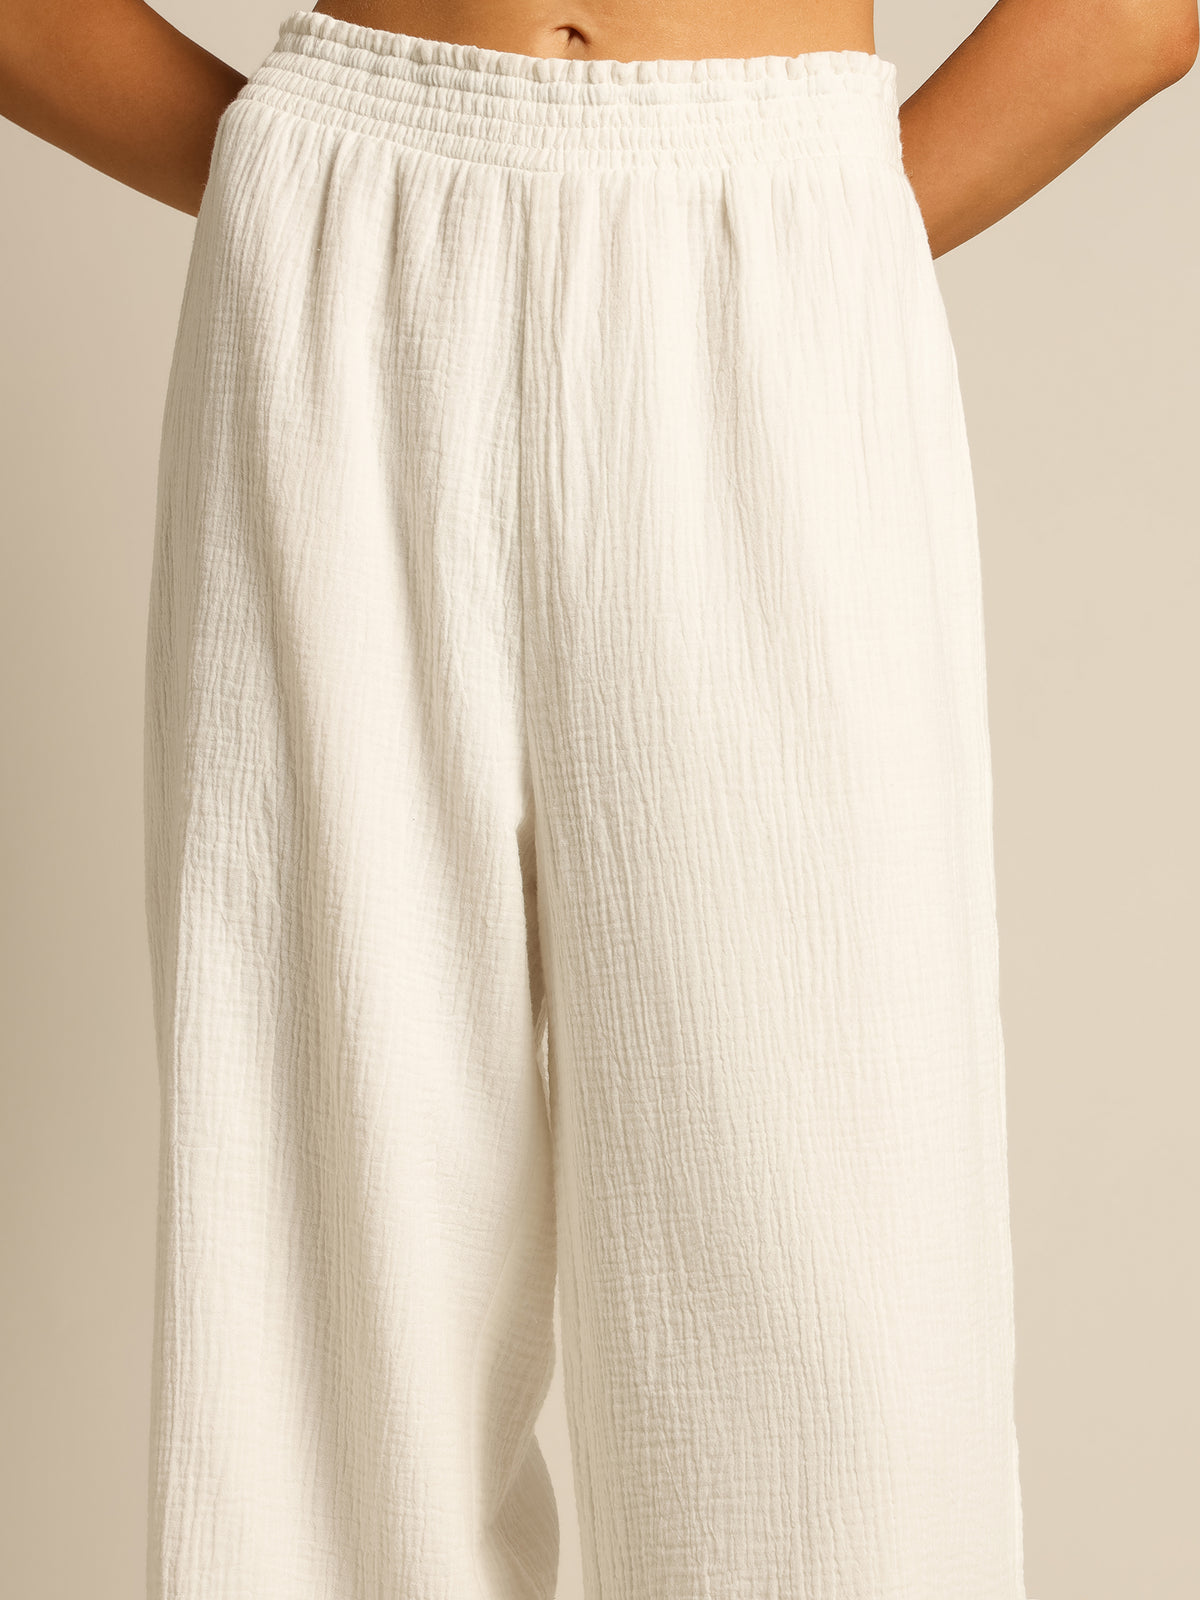 Liana Culotte Pants in White